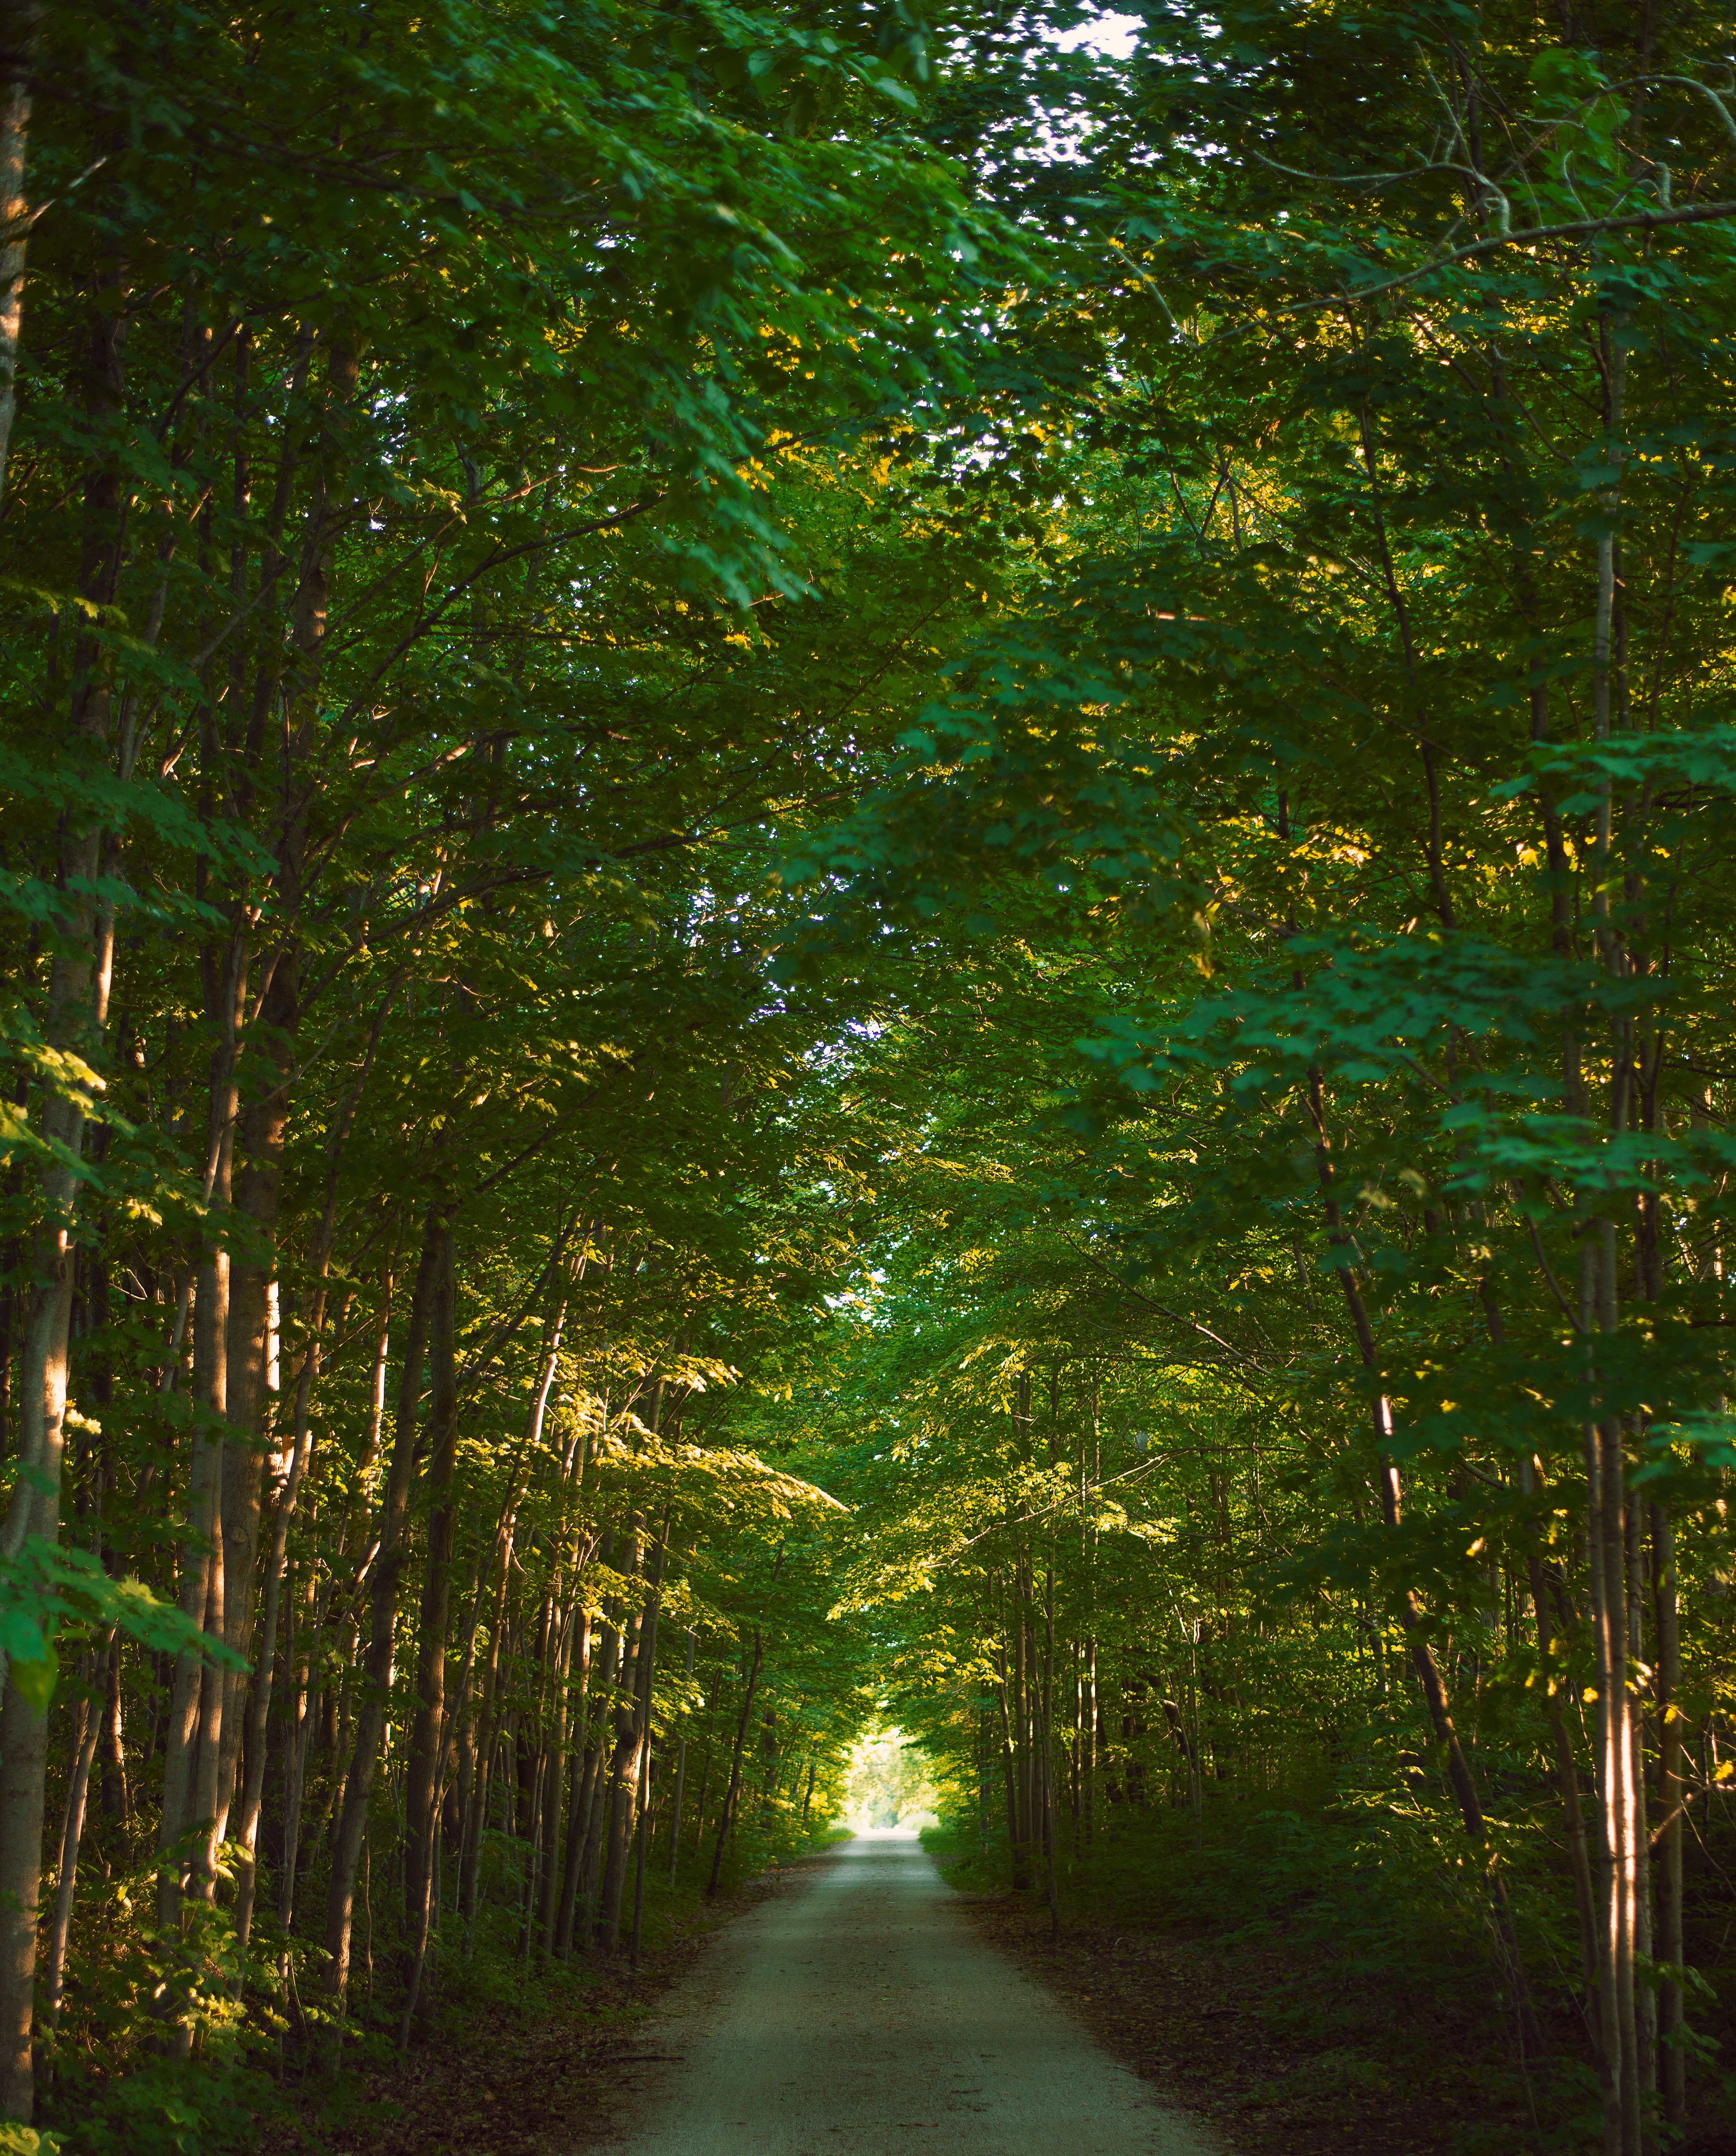 Strada vuota avvolta da alberi verdi Foto 